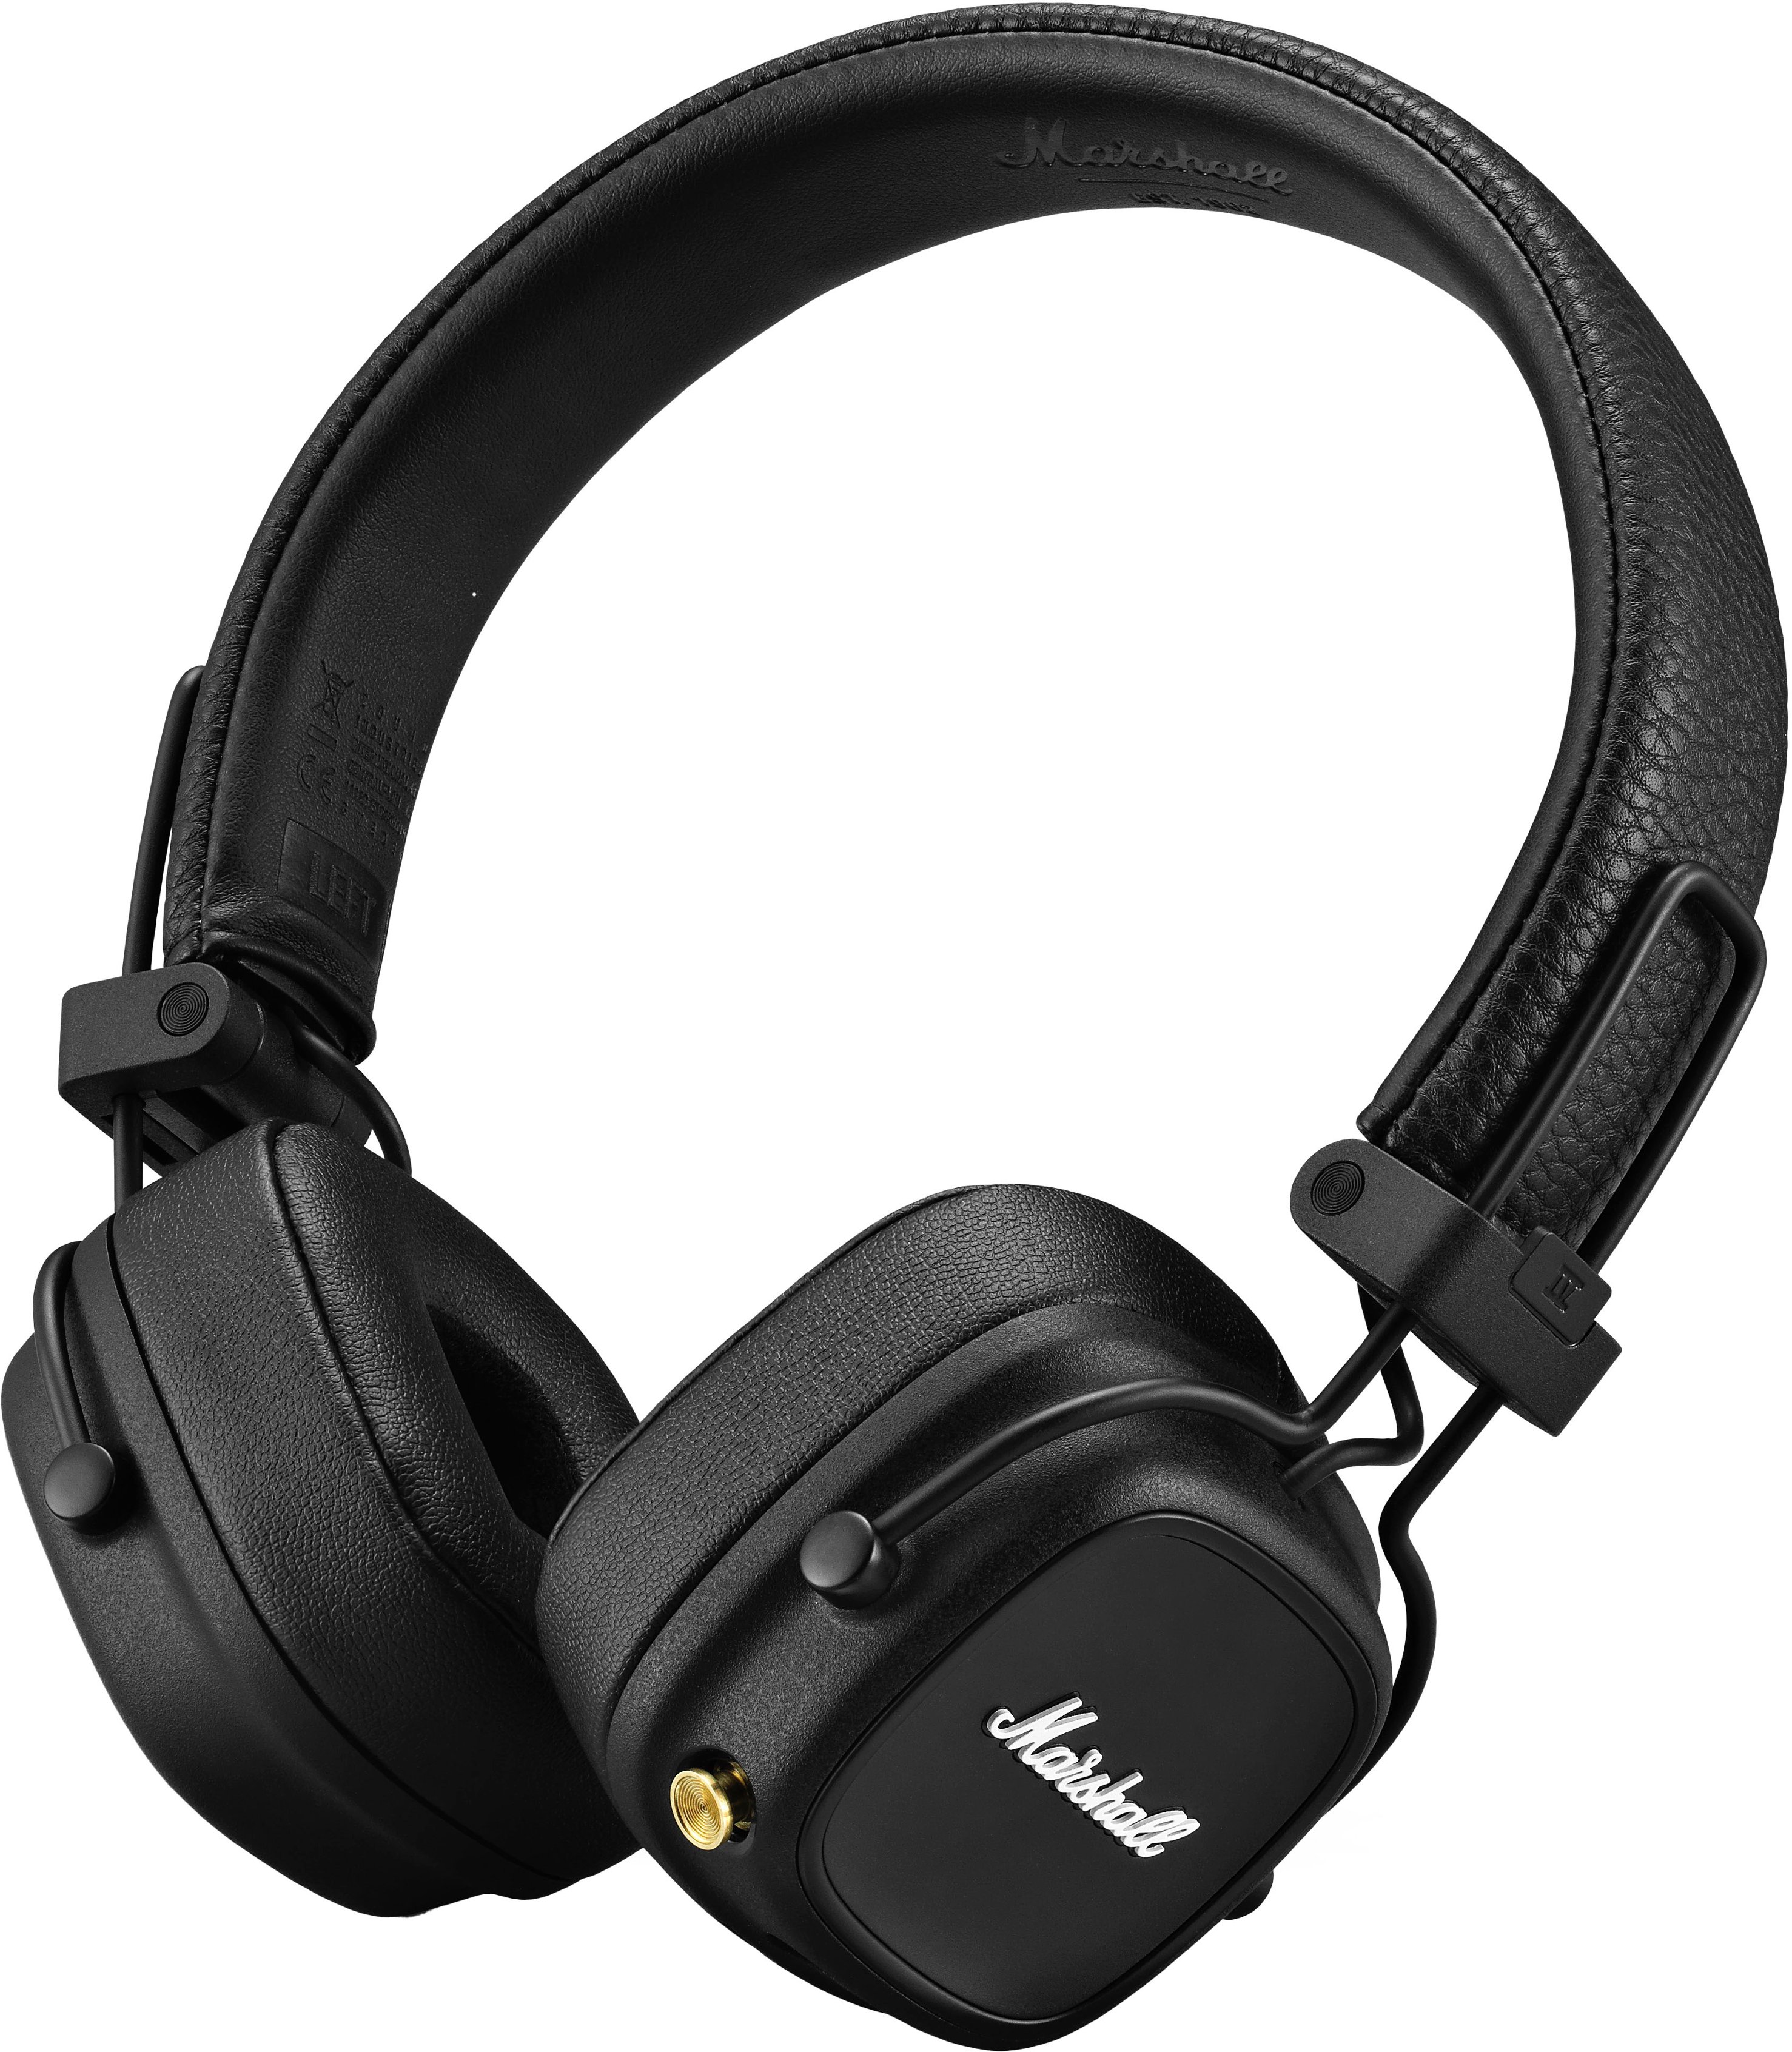 Marshall Major IV Bluetooth Headphone with wireless charging Black 